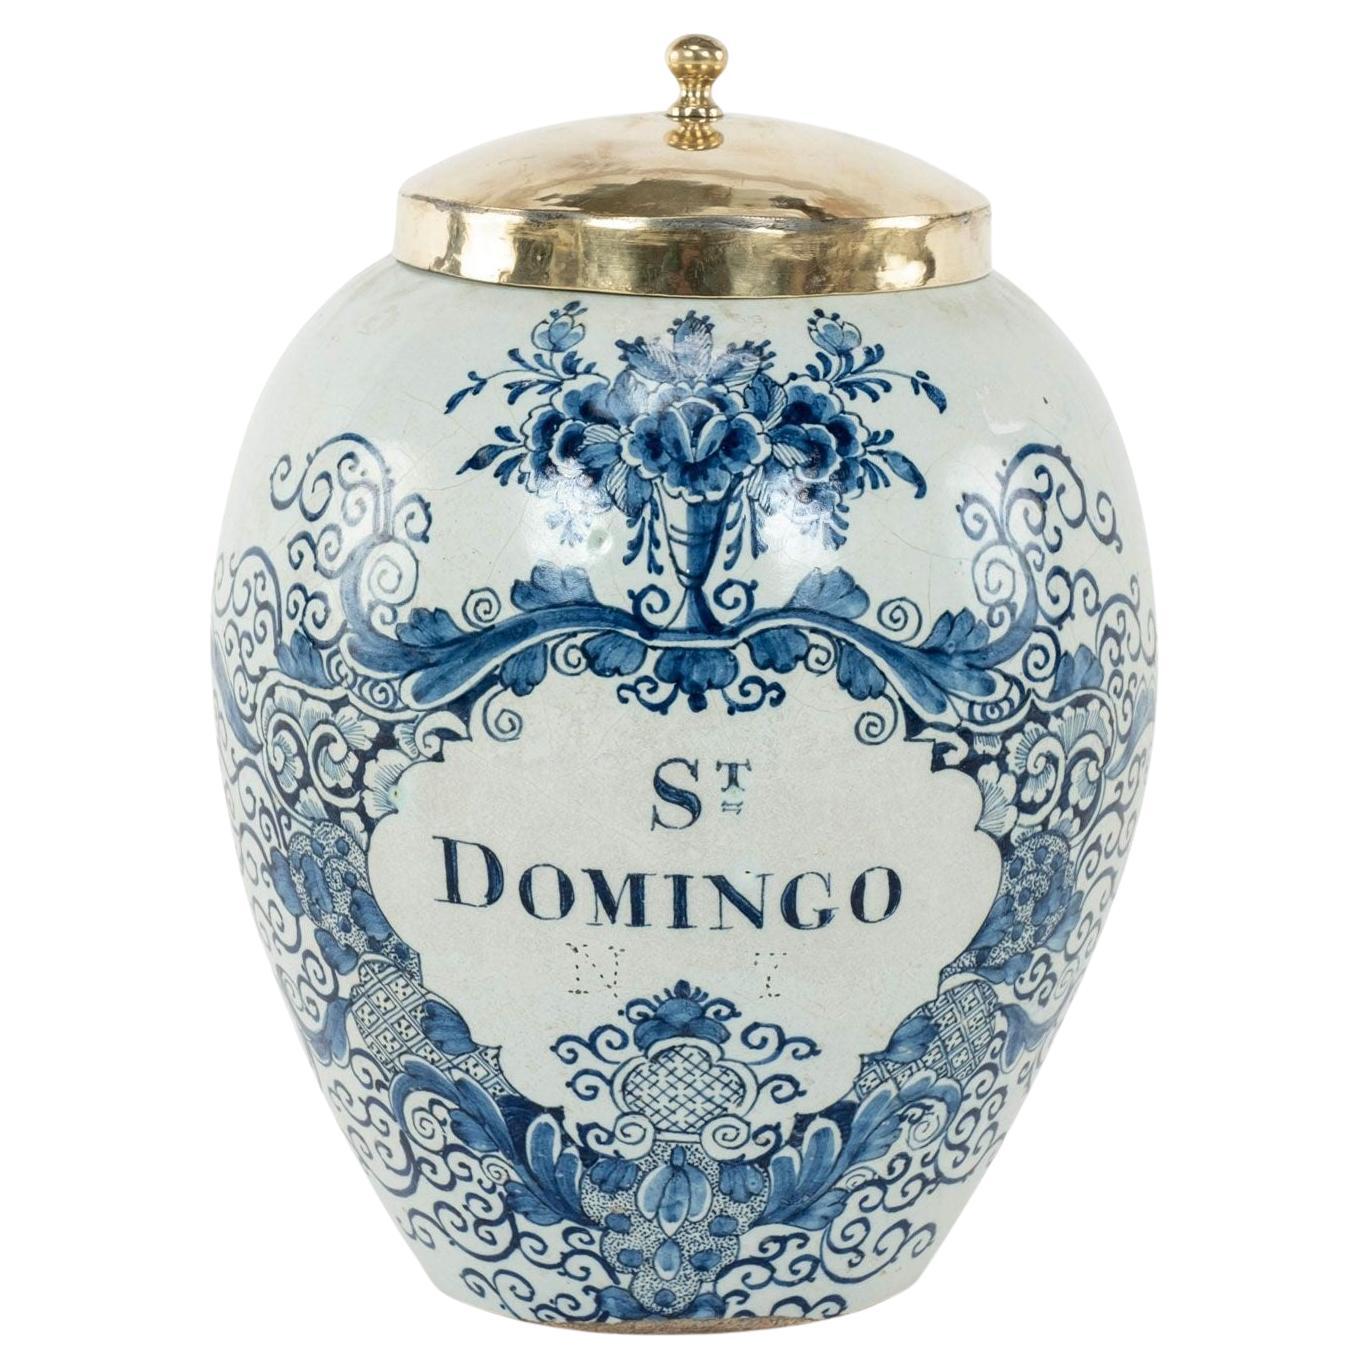 Delft Blue and White "St Domingo" Tobacco Jar